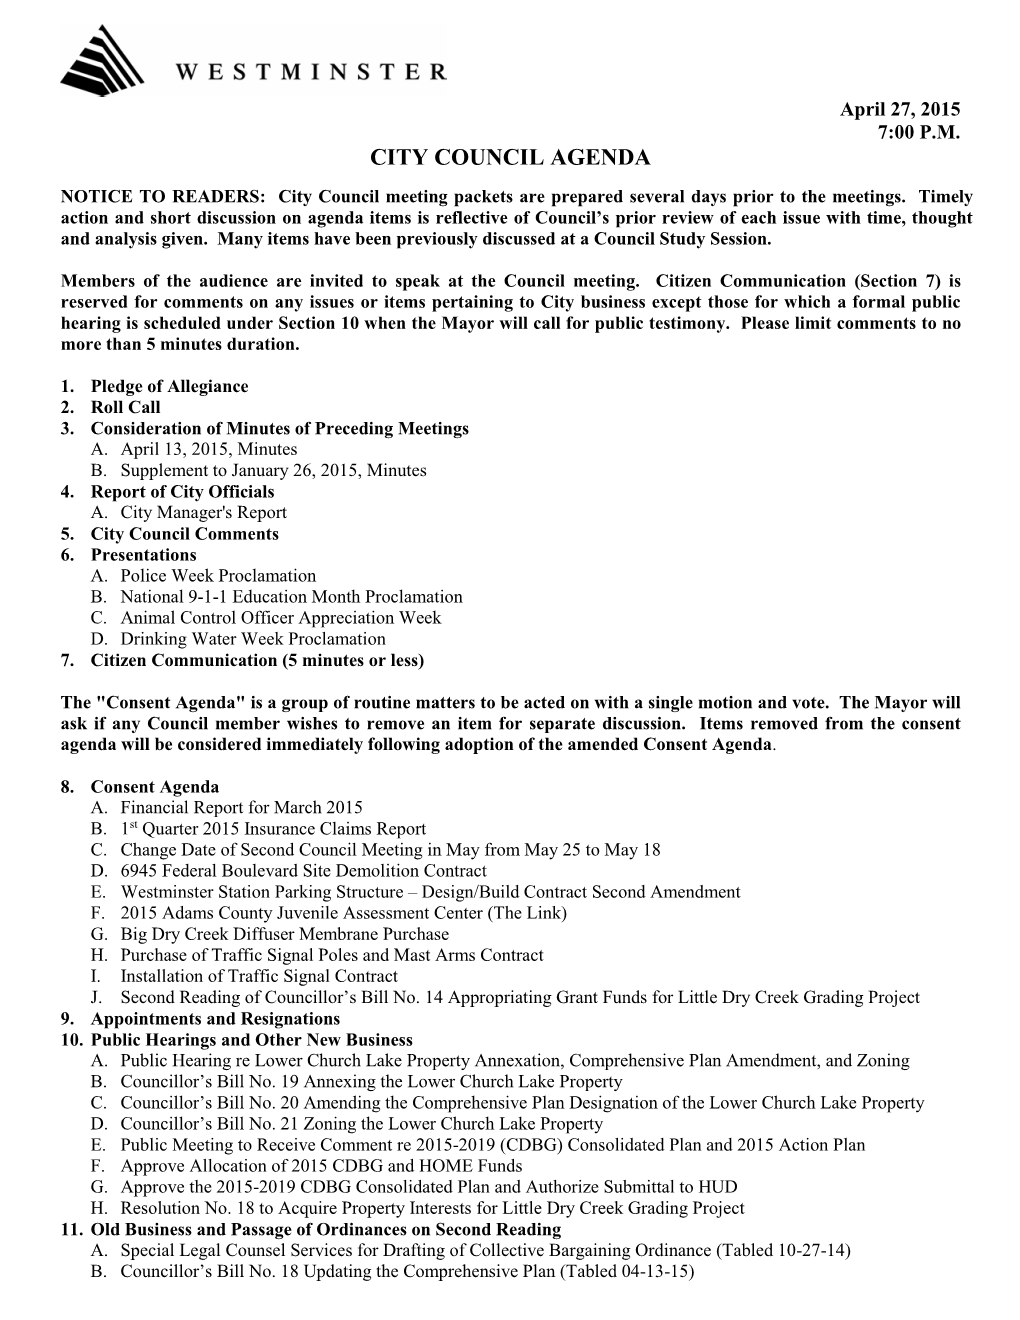 City Council Agenda for April 27, 2015